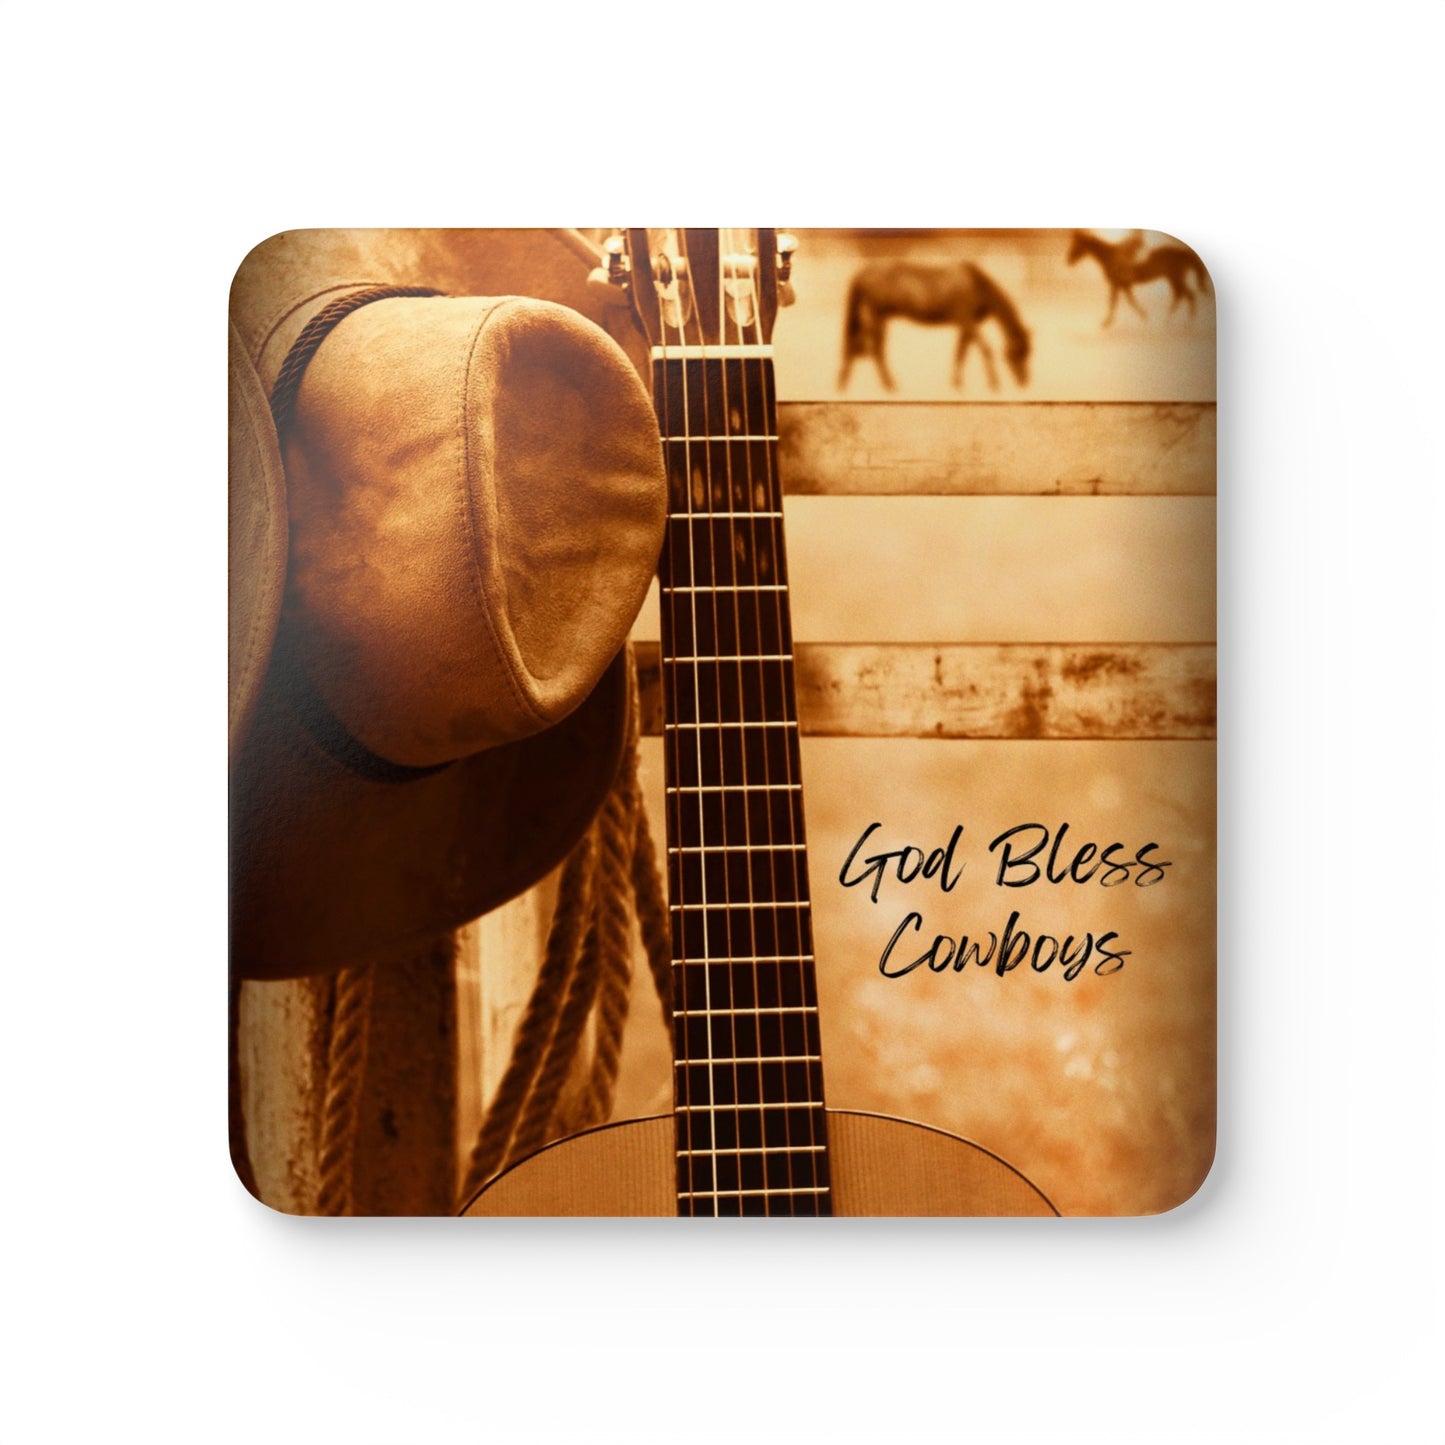 God Bless Cowboys Corkwood Coasters - Set of 4